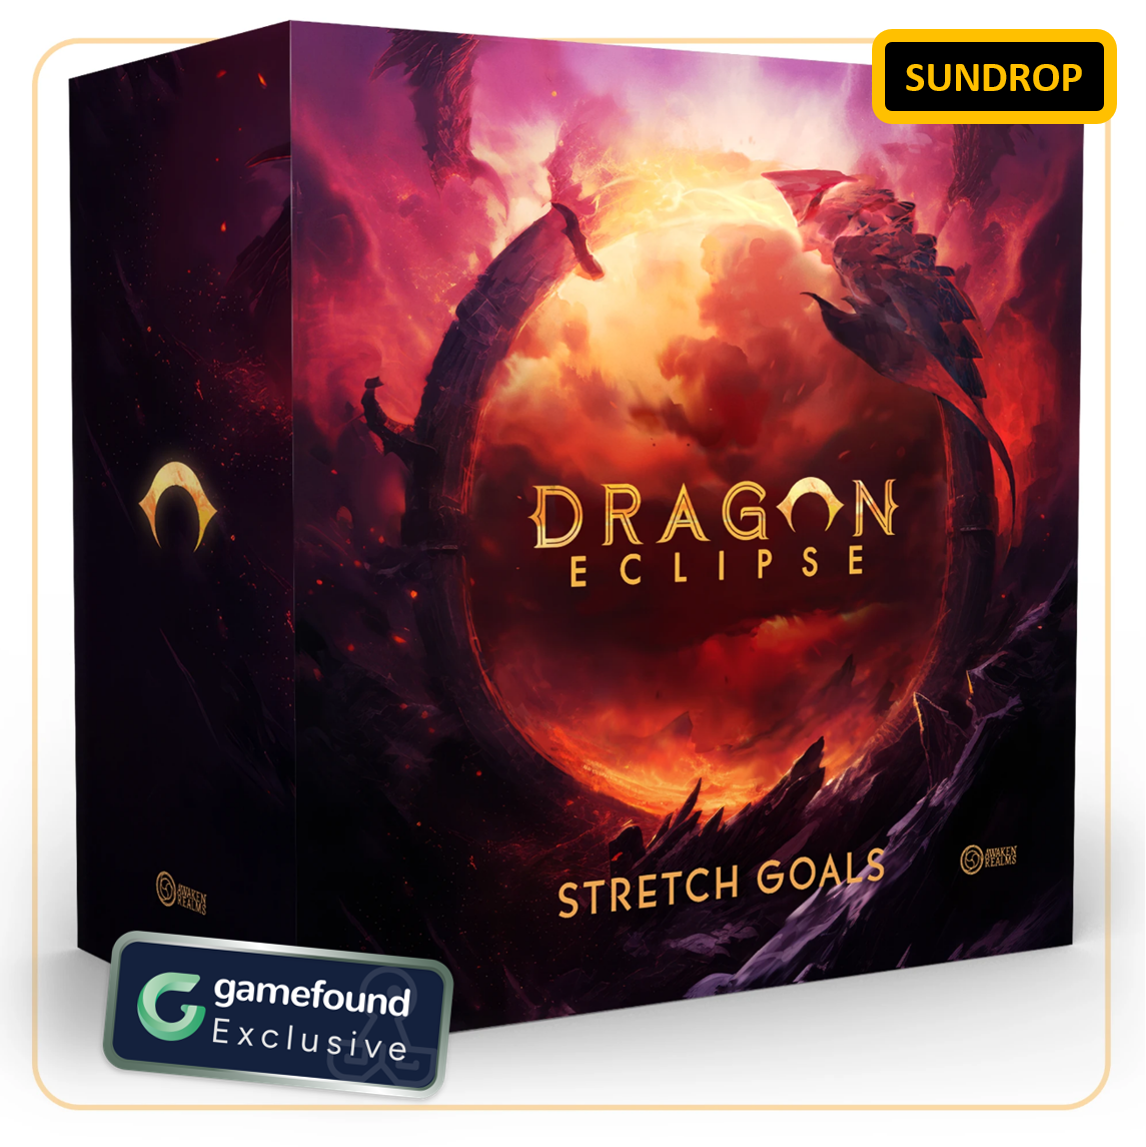 Gamefound Exclusive Dragon Eclipse Board Game Stretch Goals Box Expansion, Sundrop Edition